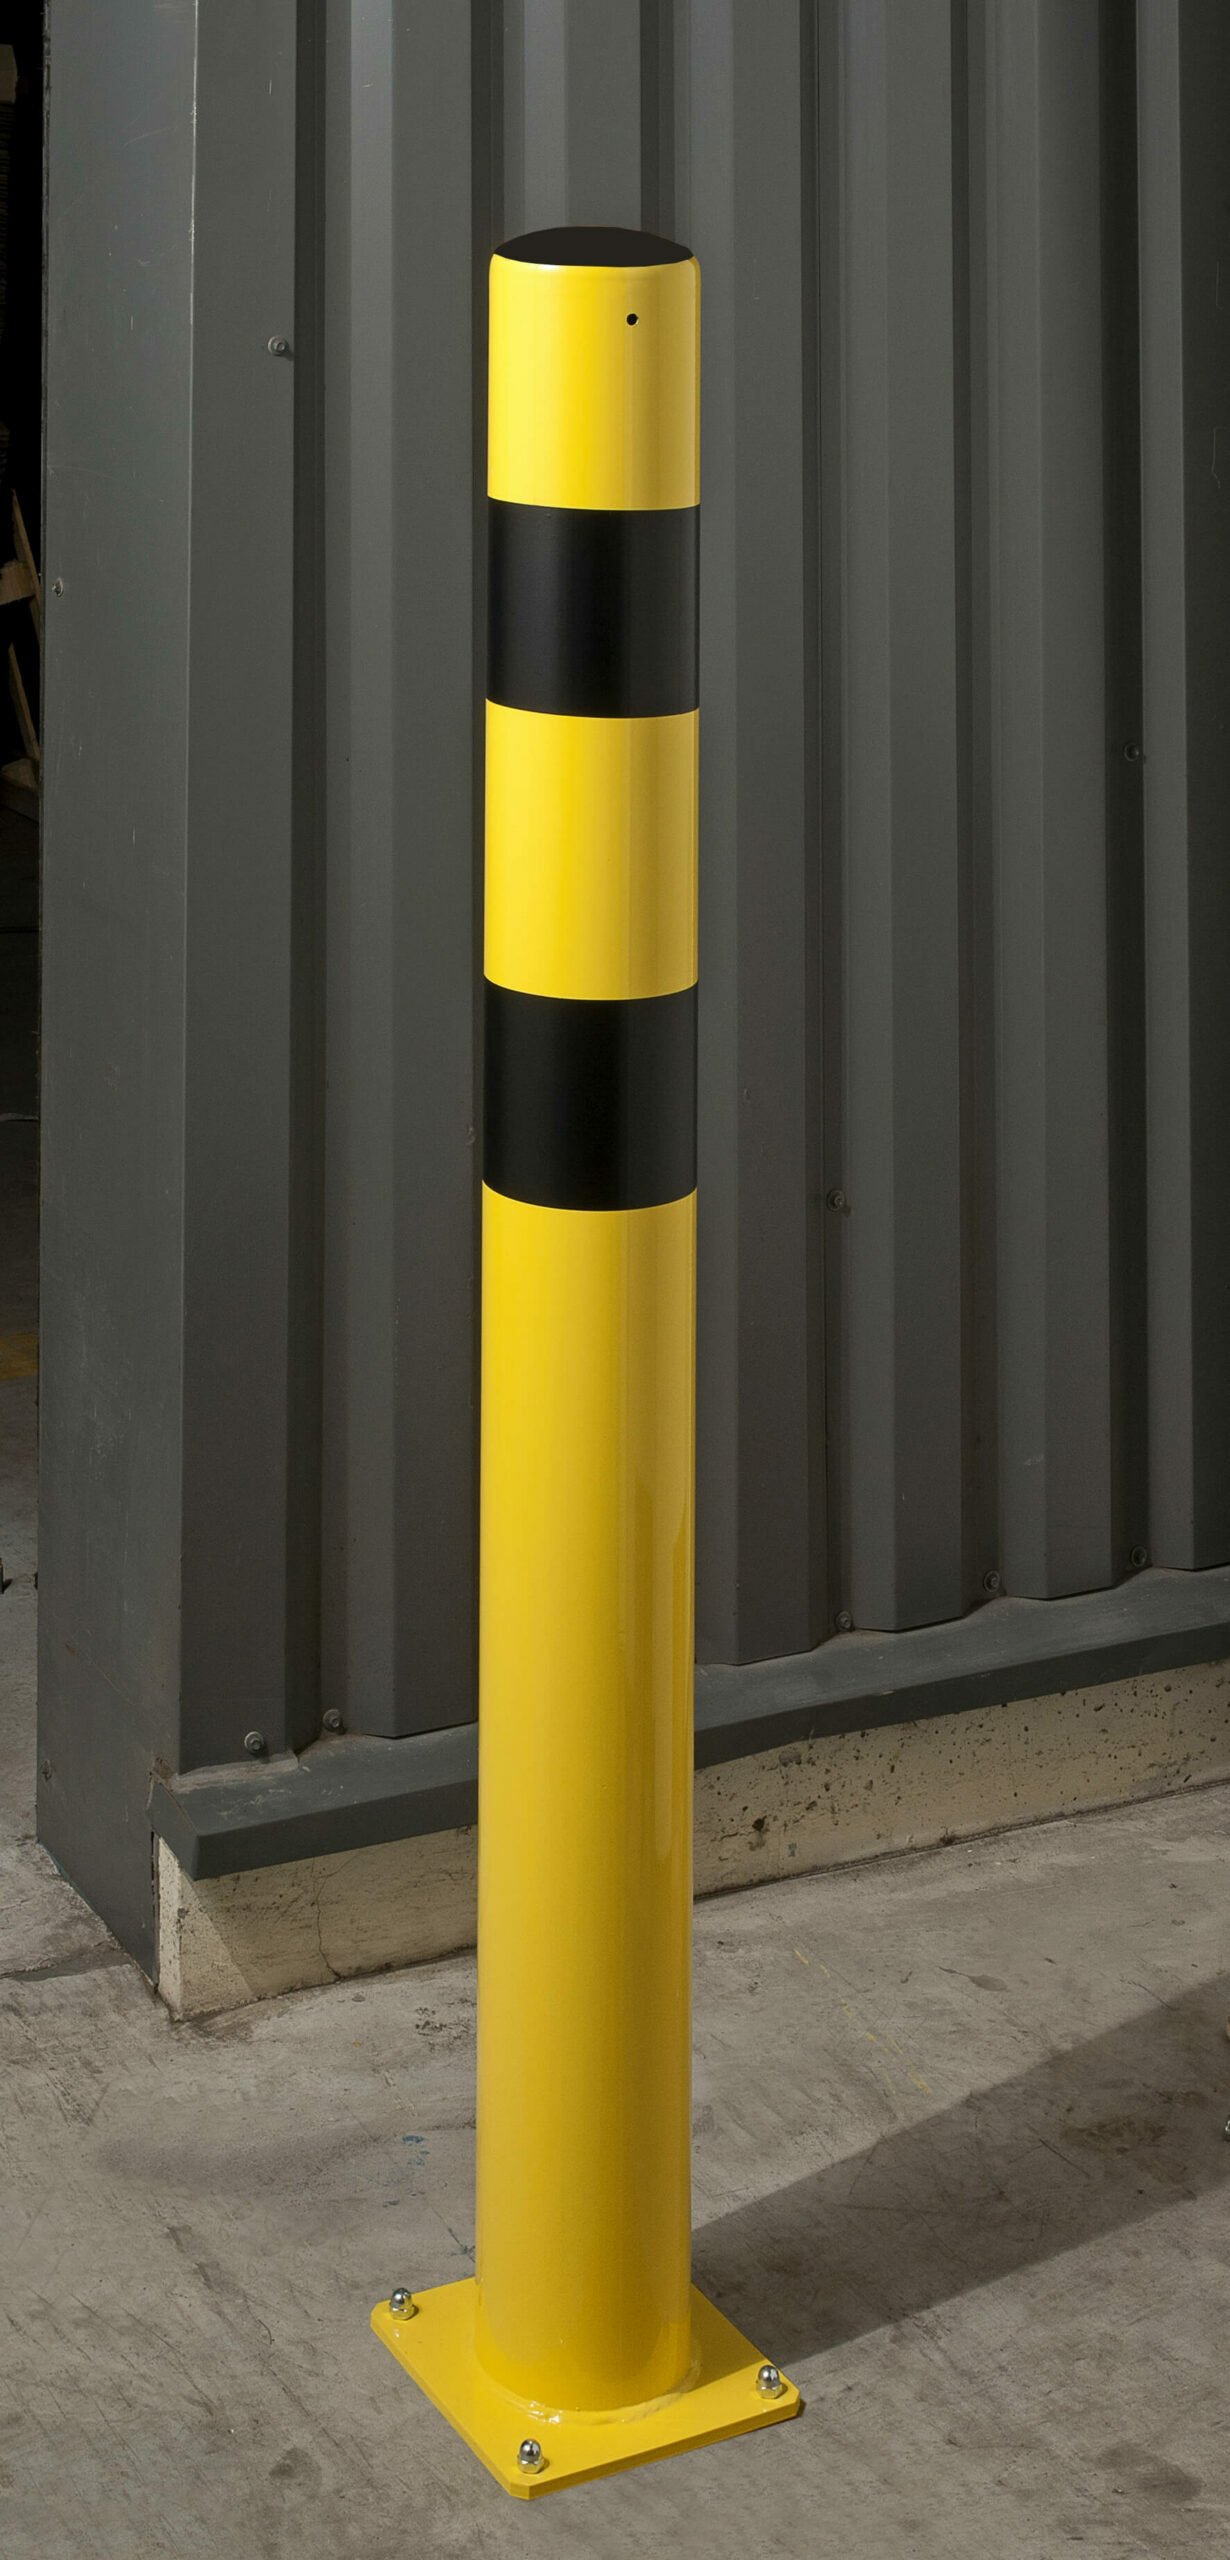 150 cm high protective poles